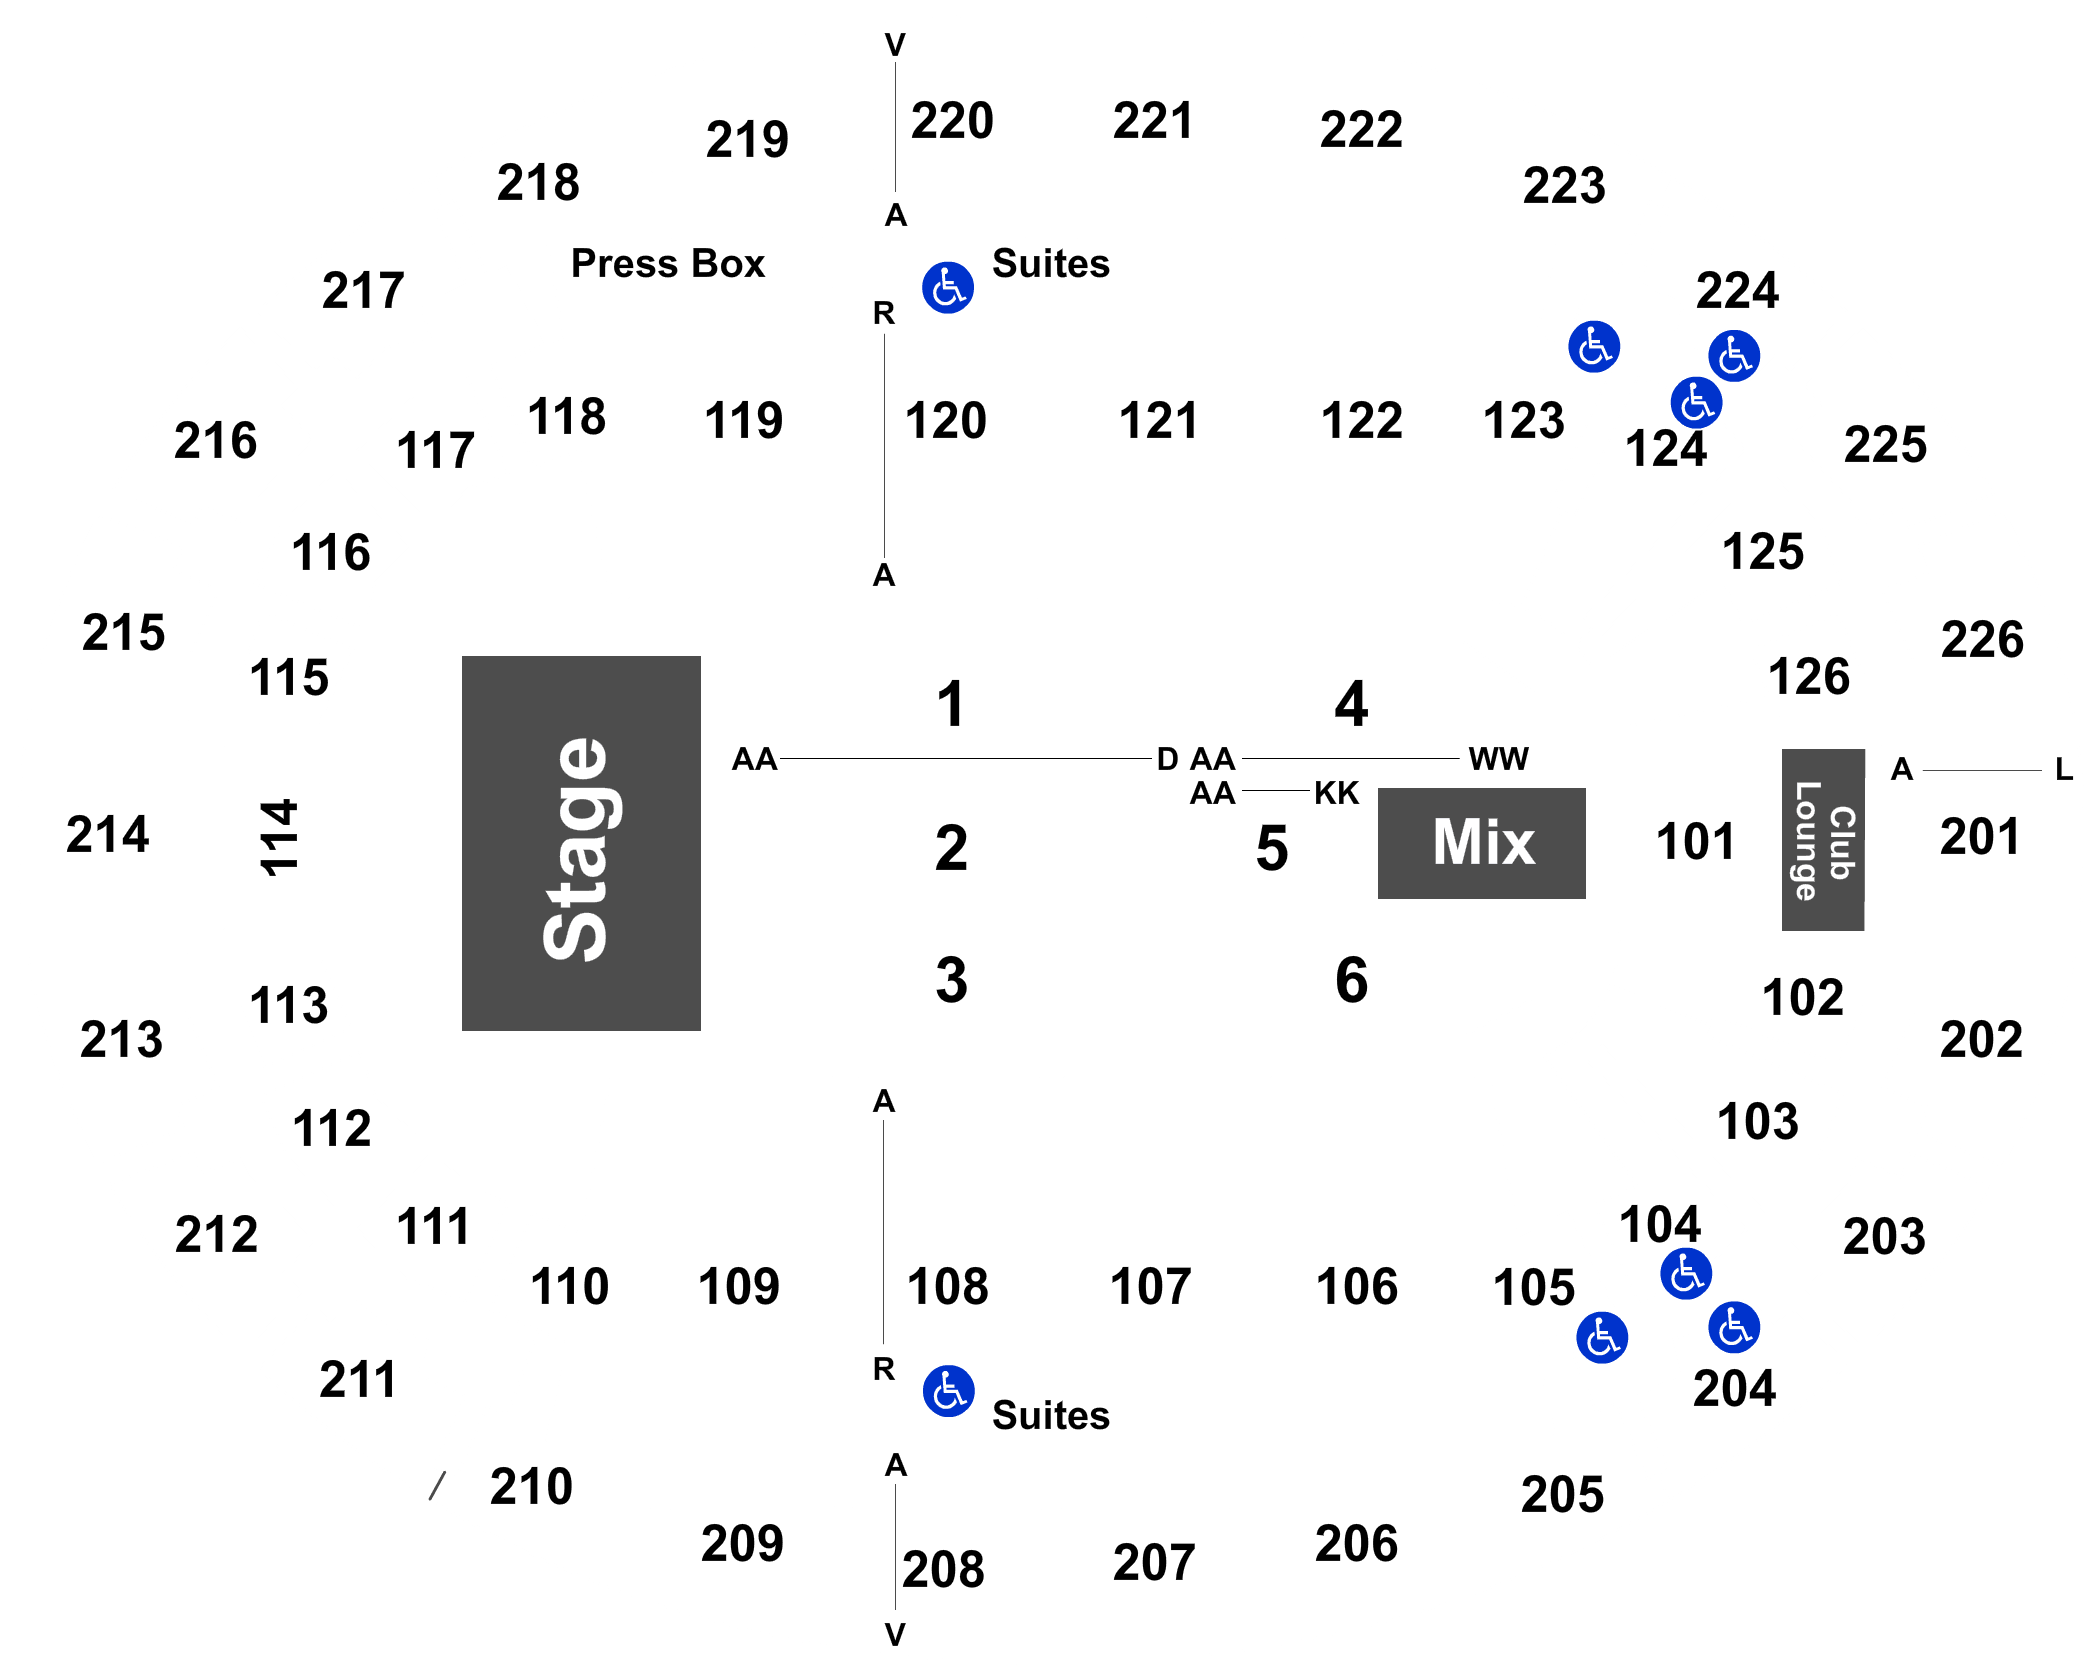 Snhu Arena Seating Chart View